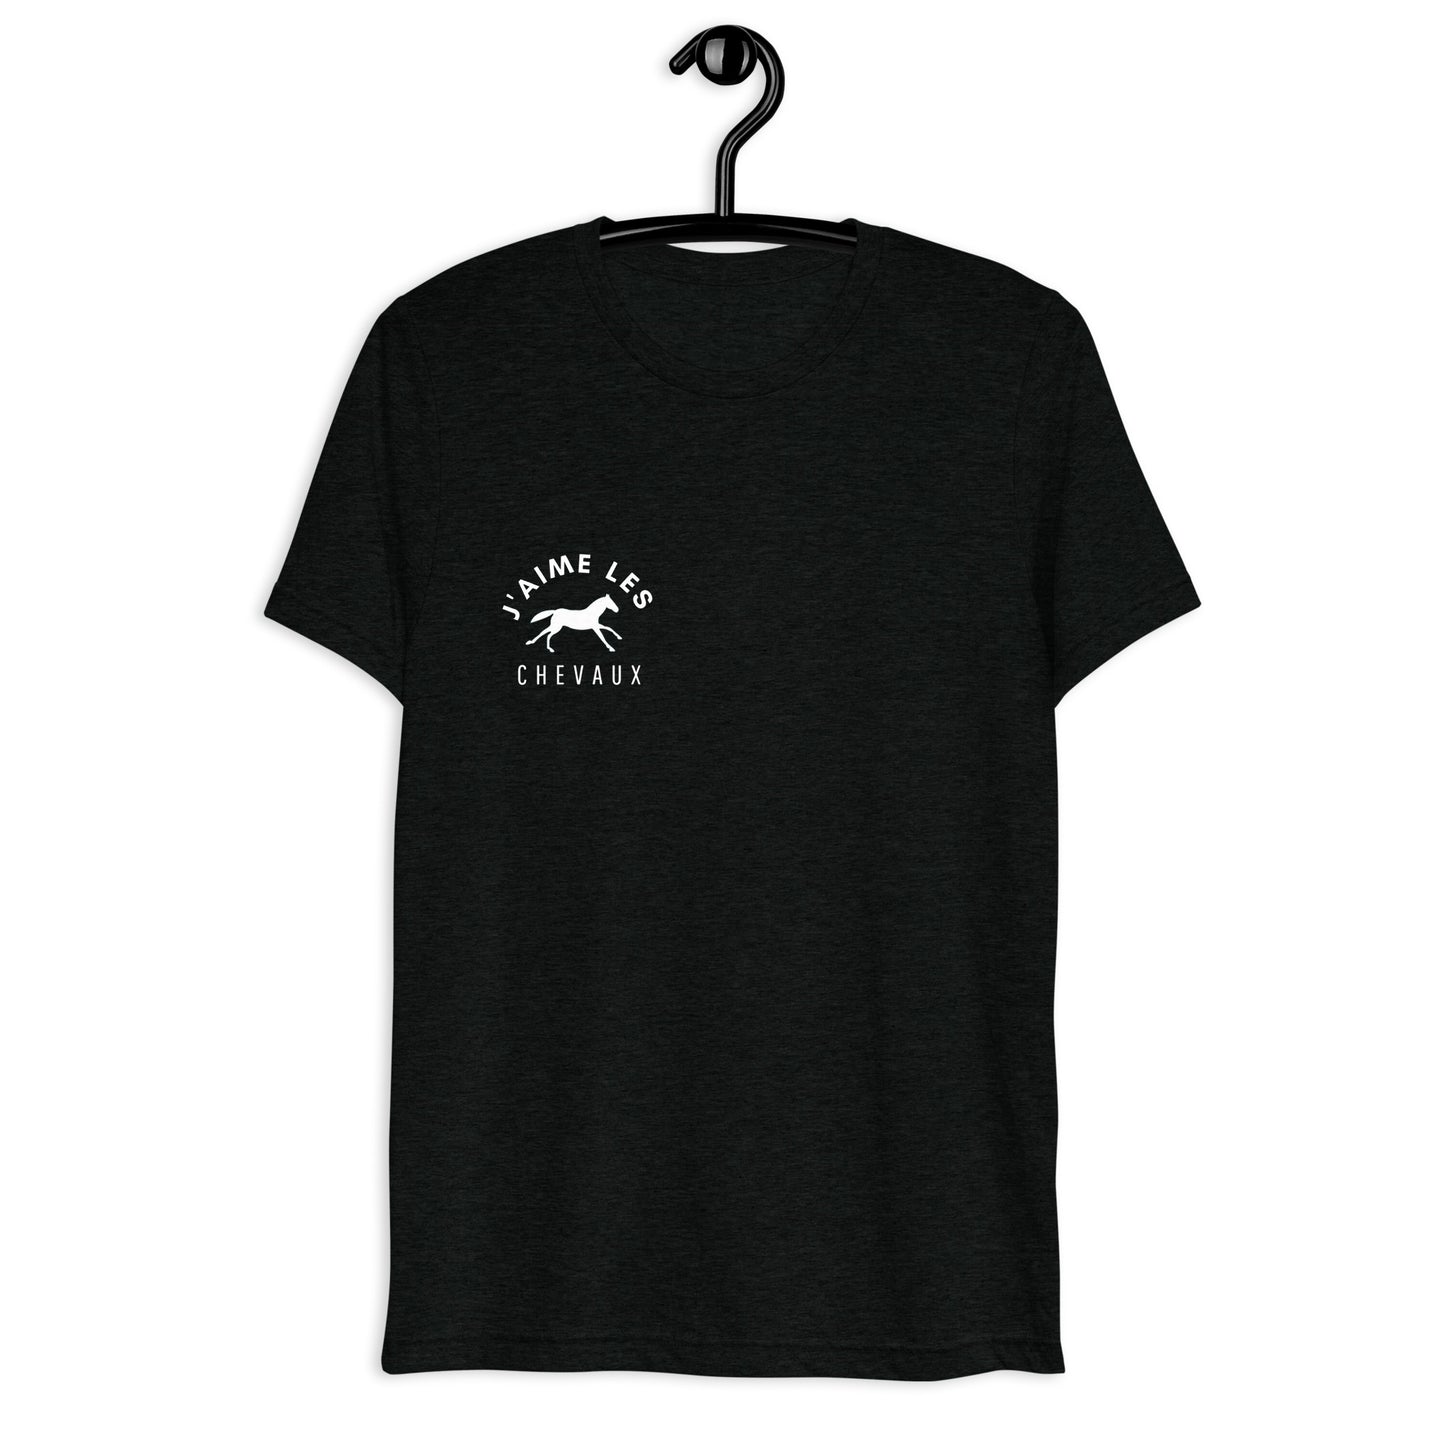 "I Love Horses" In French - Black Unisex Short Sleeve T-shirt